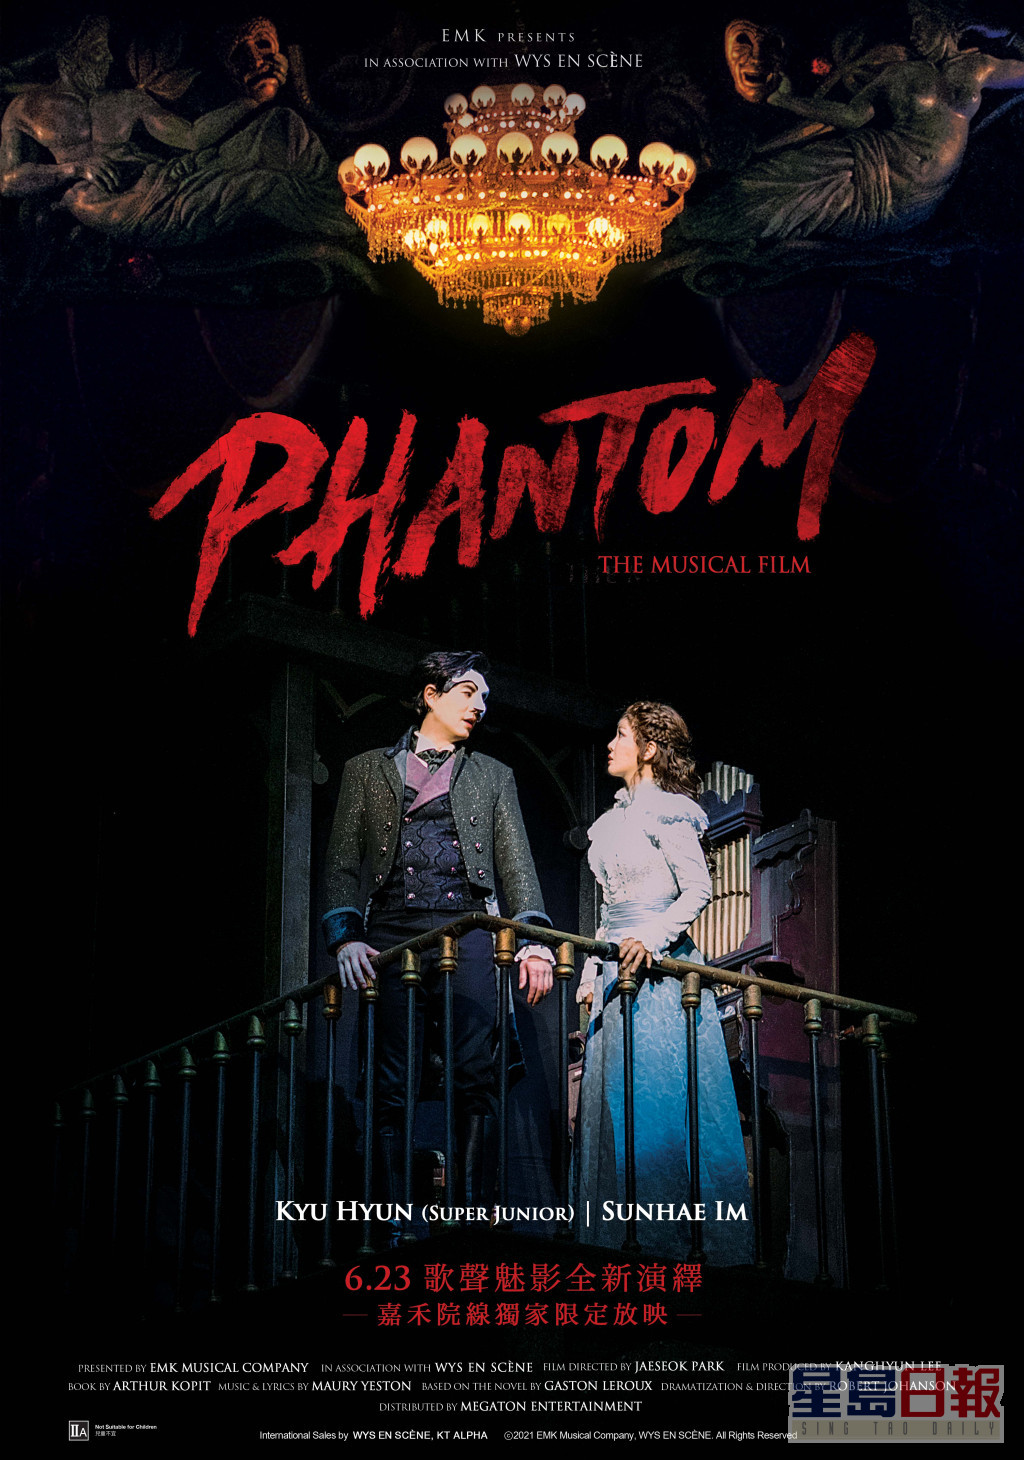 《PHANTOM THE MUSICAL FILM》将于6月23日在港上映。